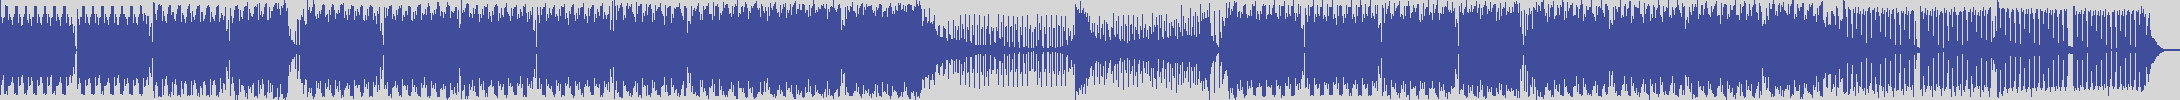 nf_boyz_records [NFY007] Kardinal - Classika House [Plaia Mixa] audio wave form